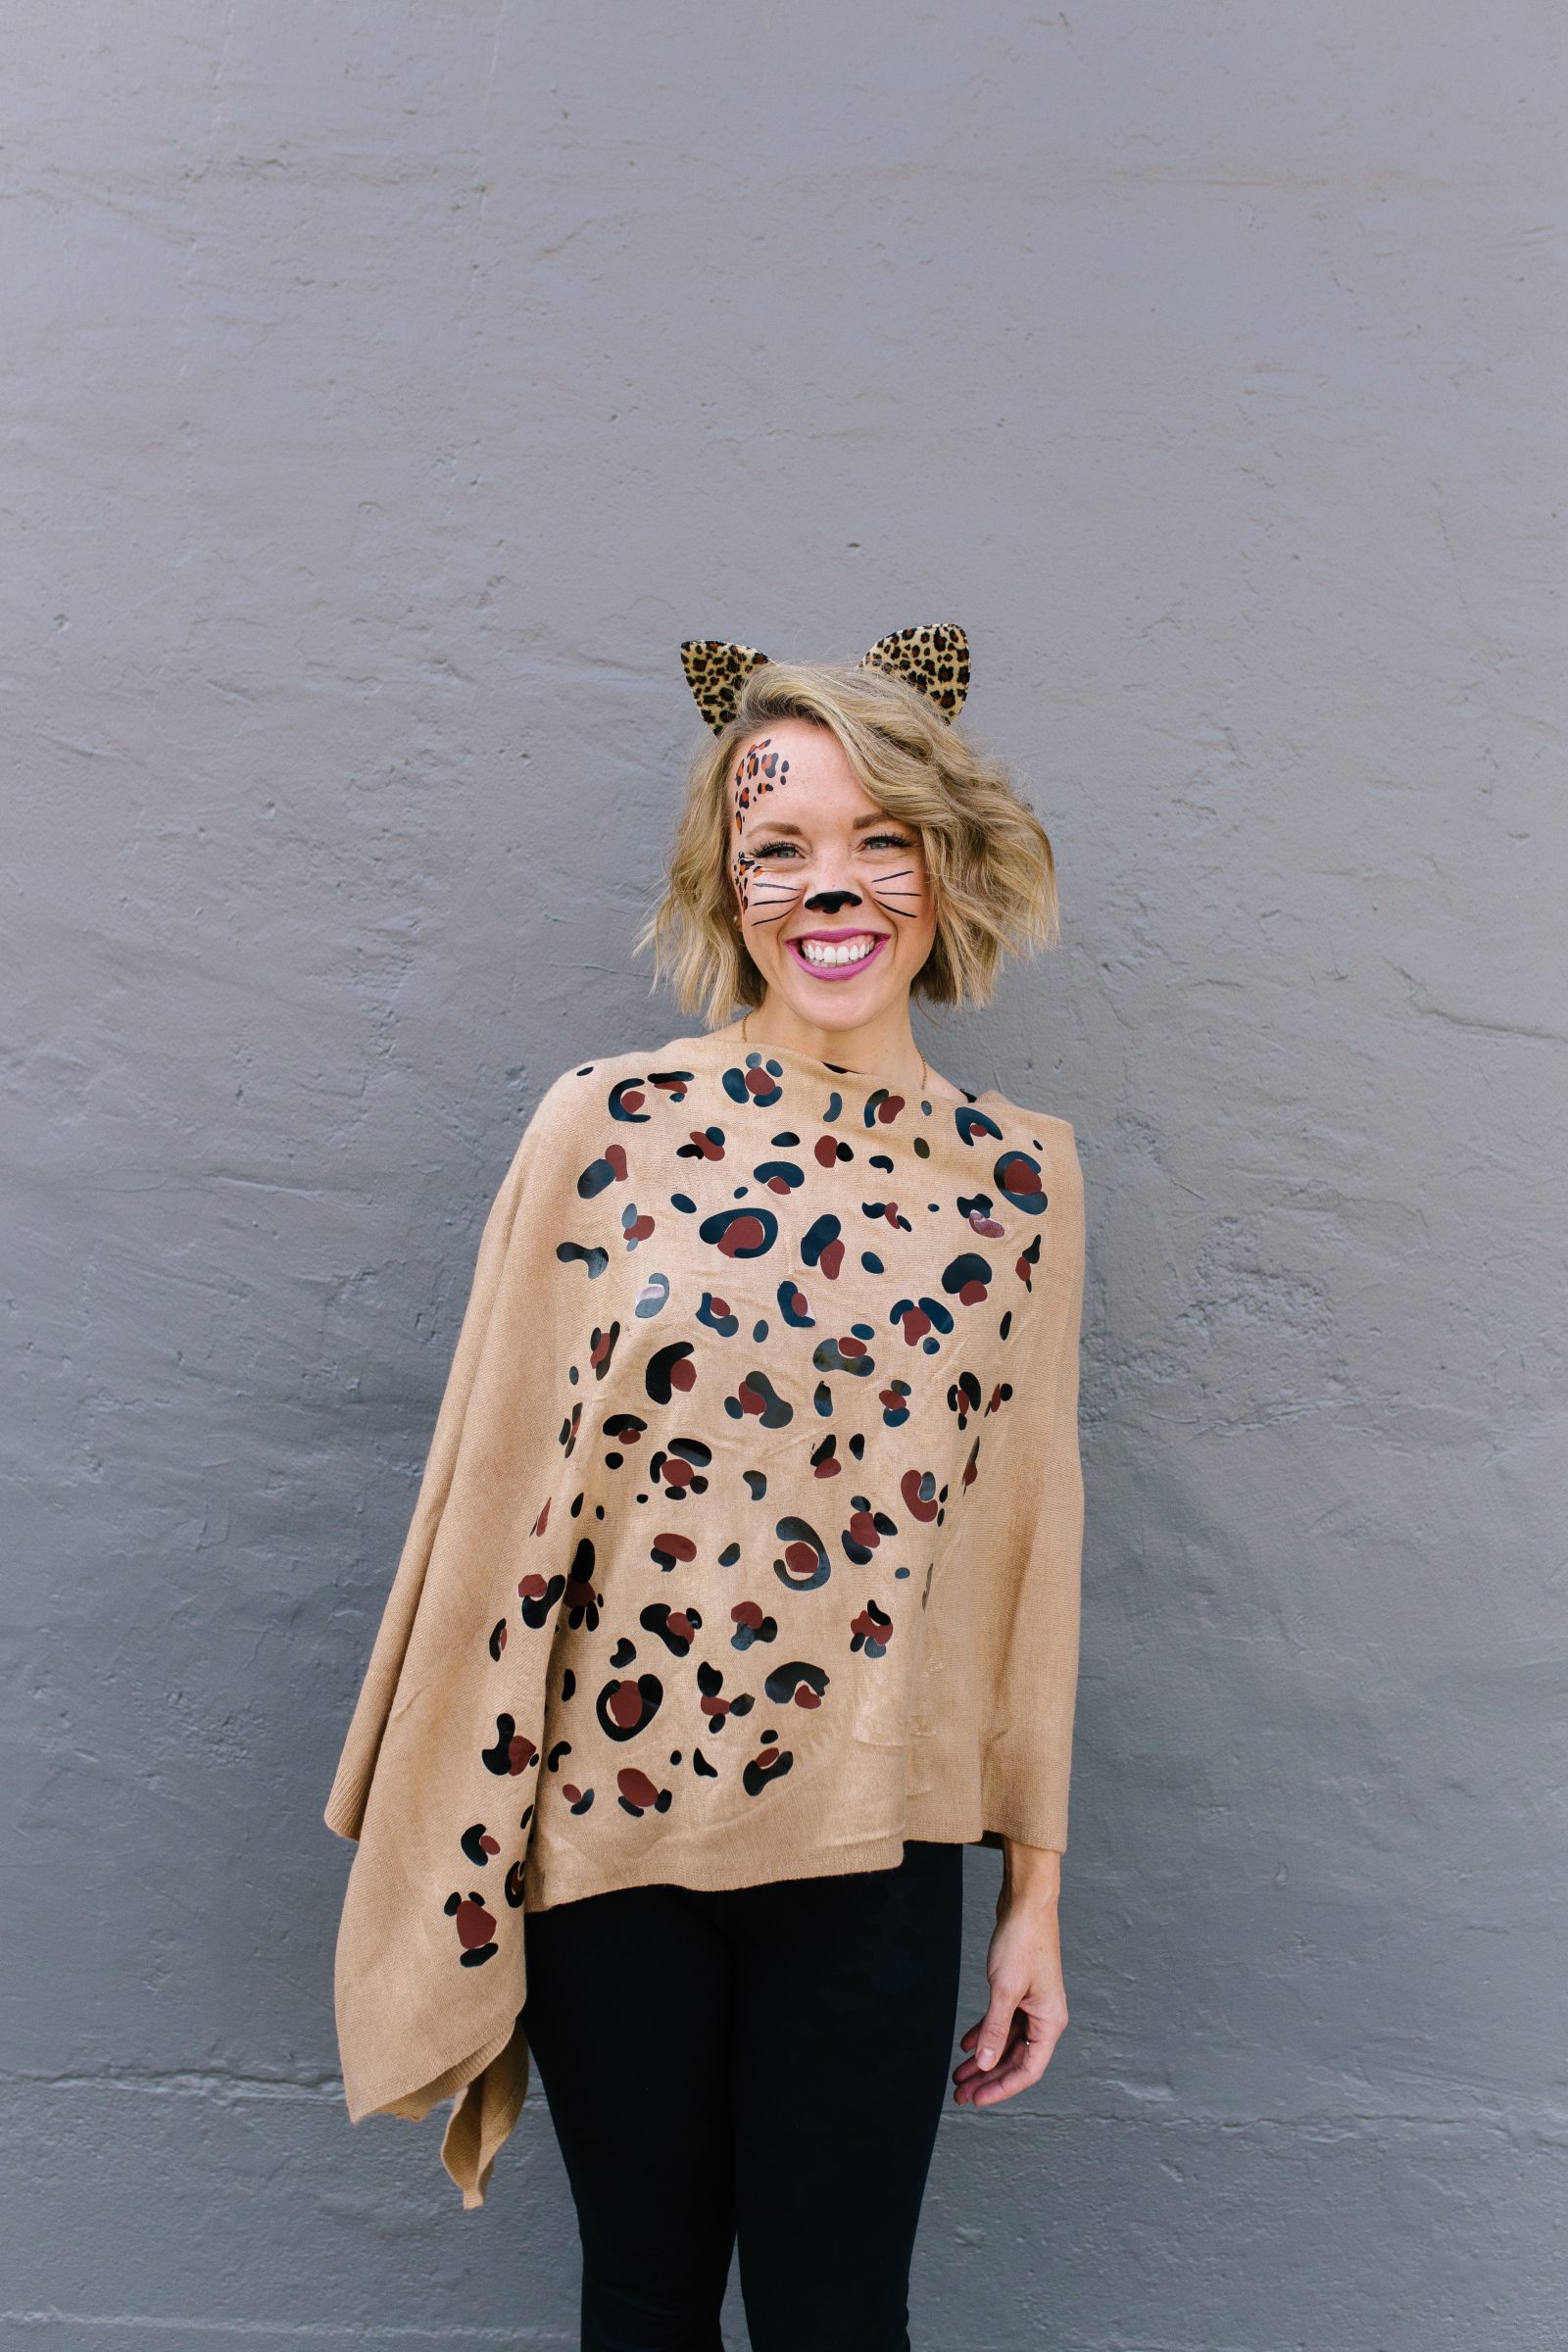 DIY Halloween Costumes: Women's DIY Leopard Costume | The Pretty Life Girls